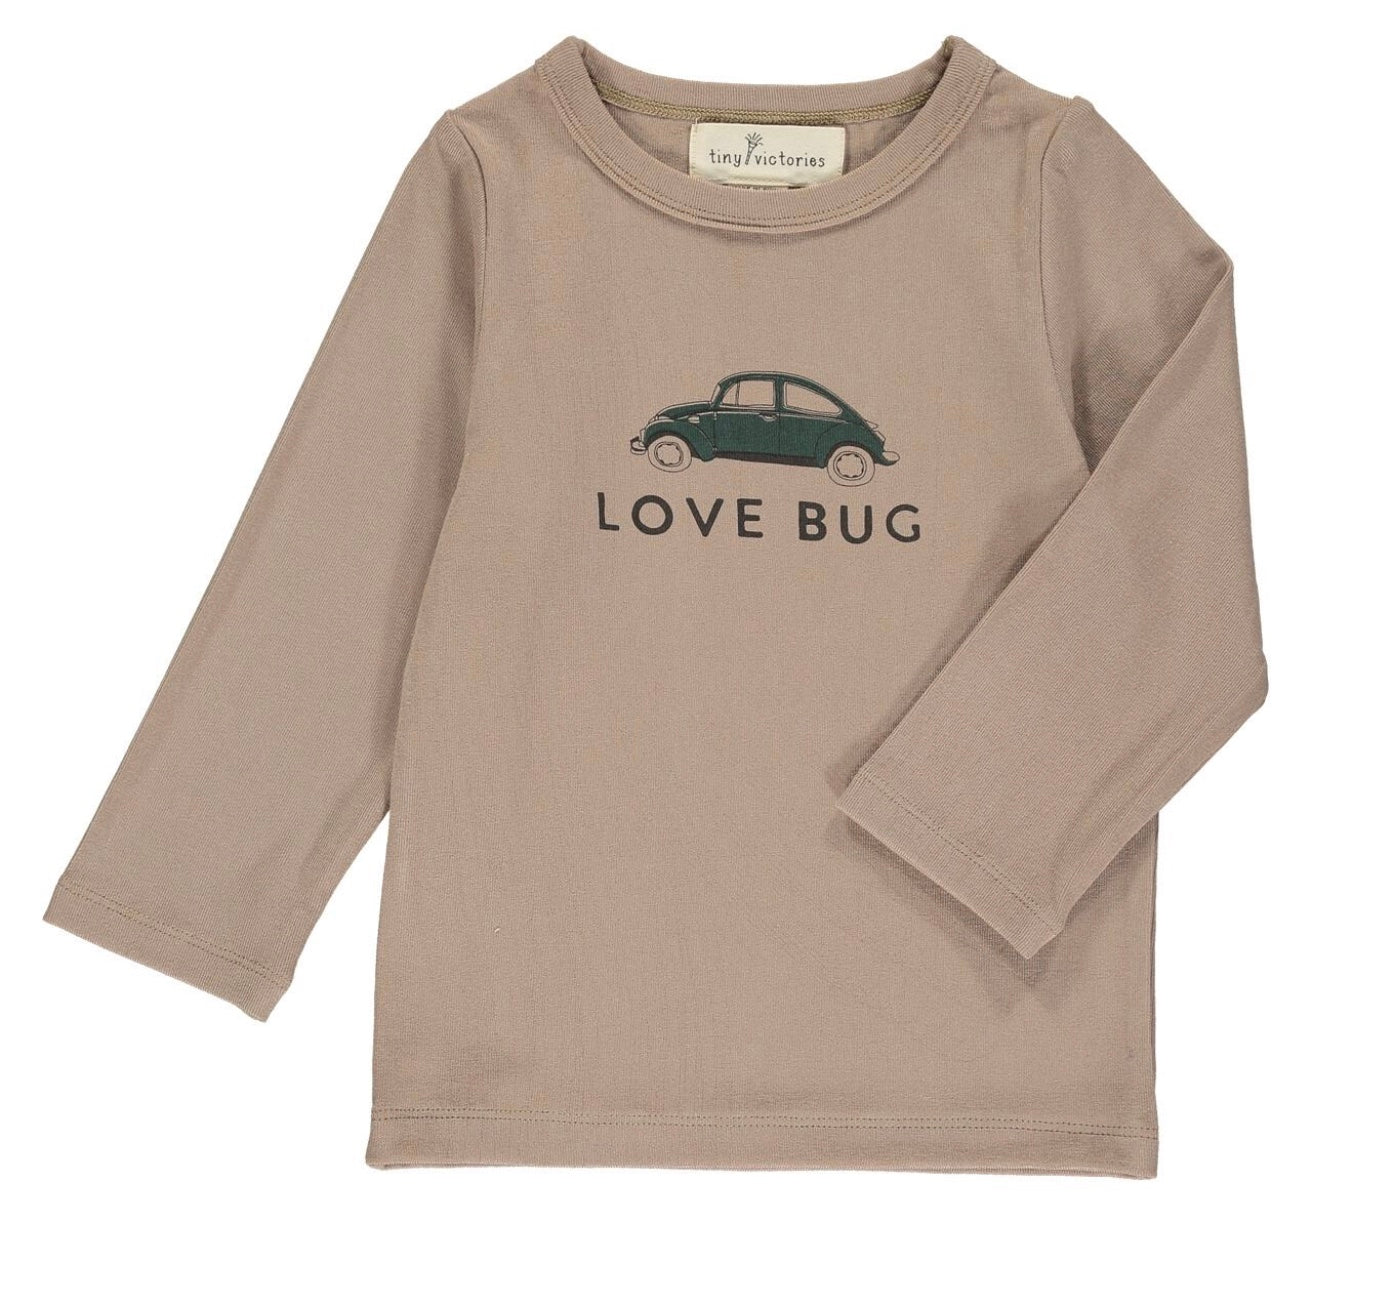 Love Bug Long Sleeve Top